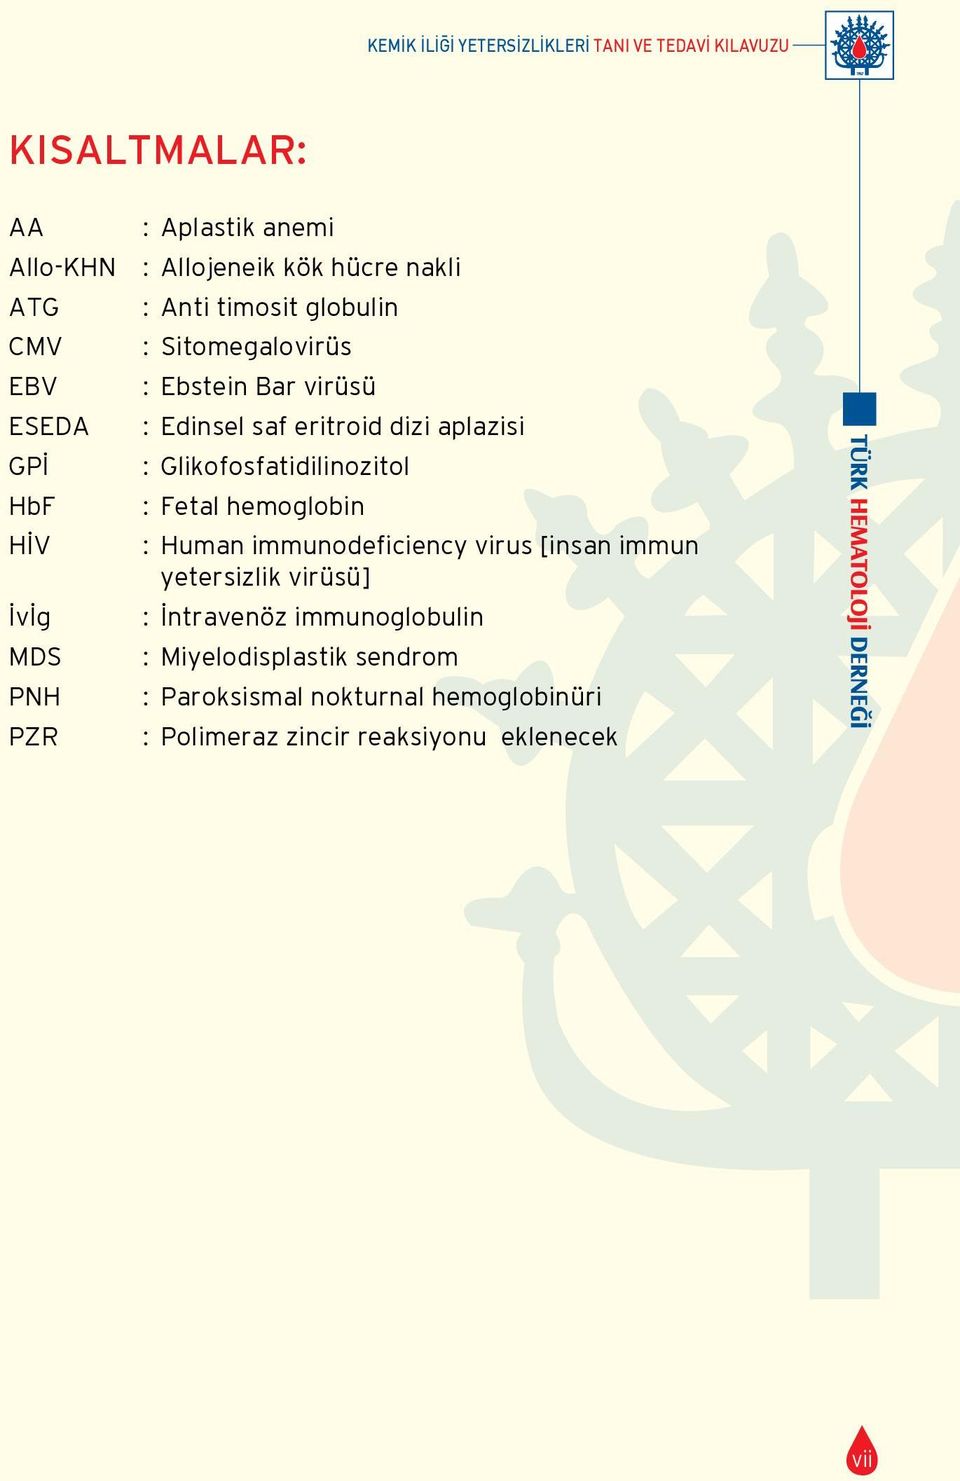 eritroid dizi aplazisi : Glikofosfatidilinozitol : Fetal hemoglobin : Human immunodeficiency virus [insan immun yetersizlik